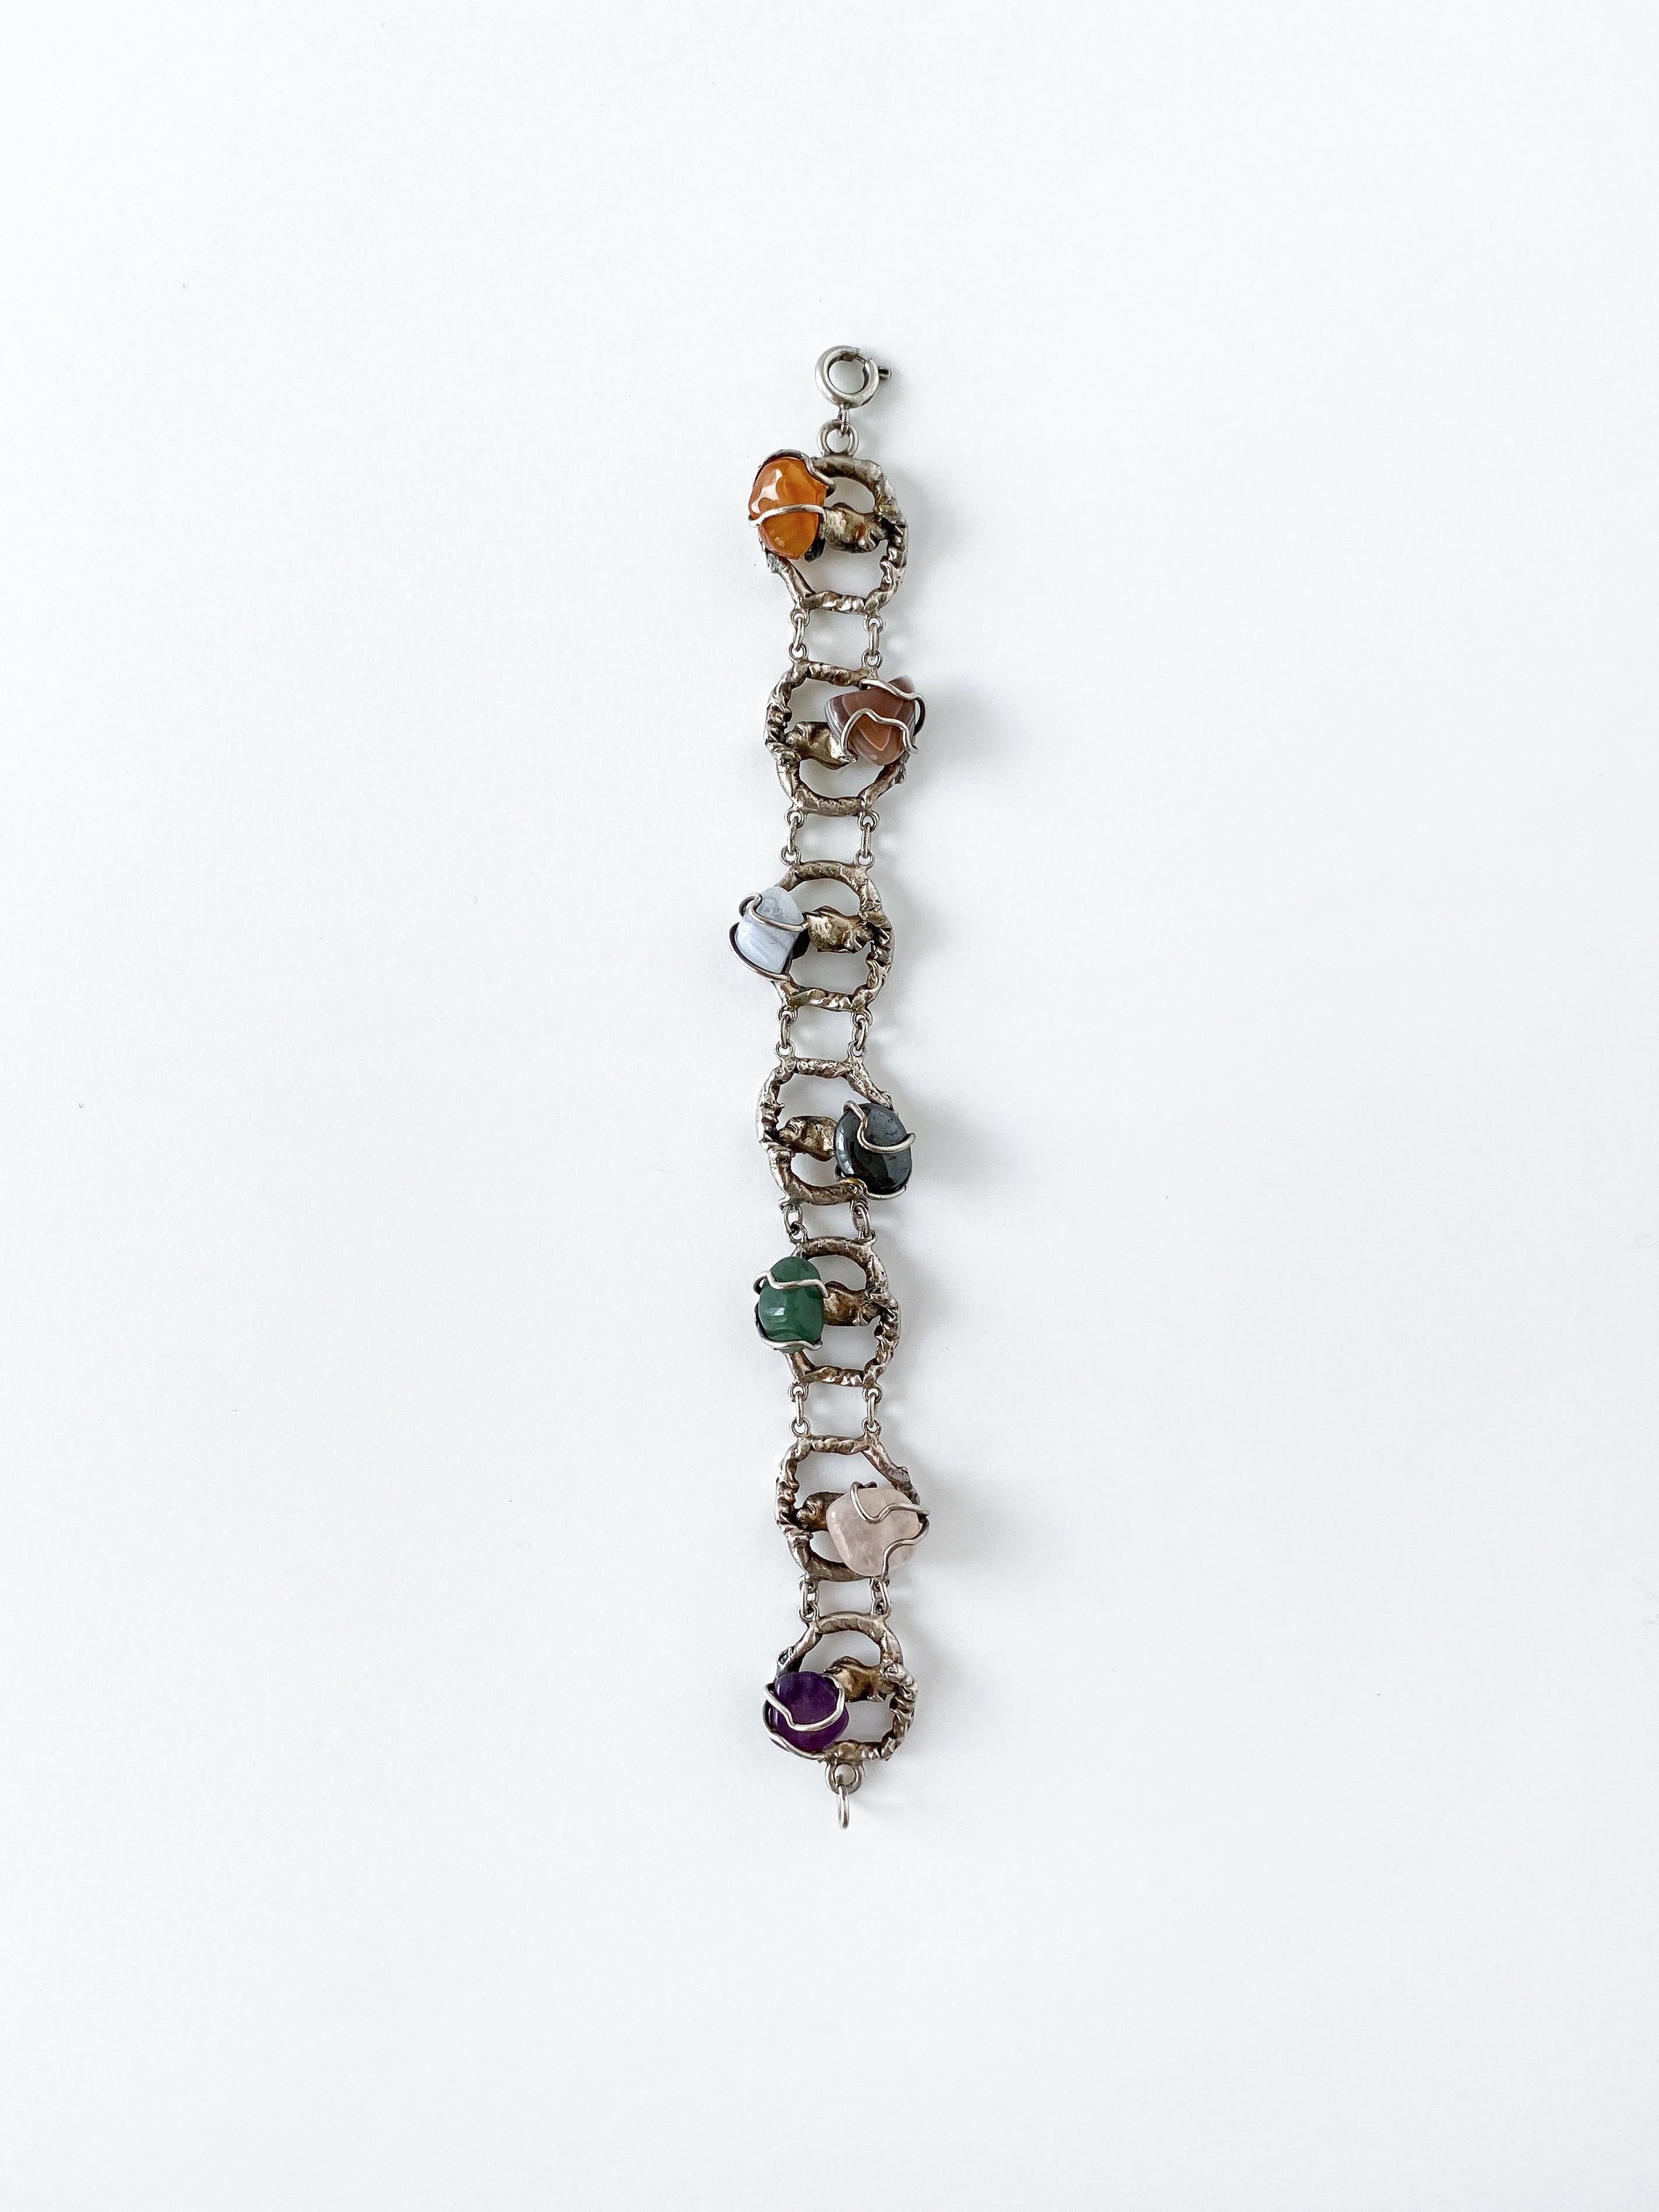 60's Brutalist metal and natural stone bracelet